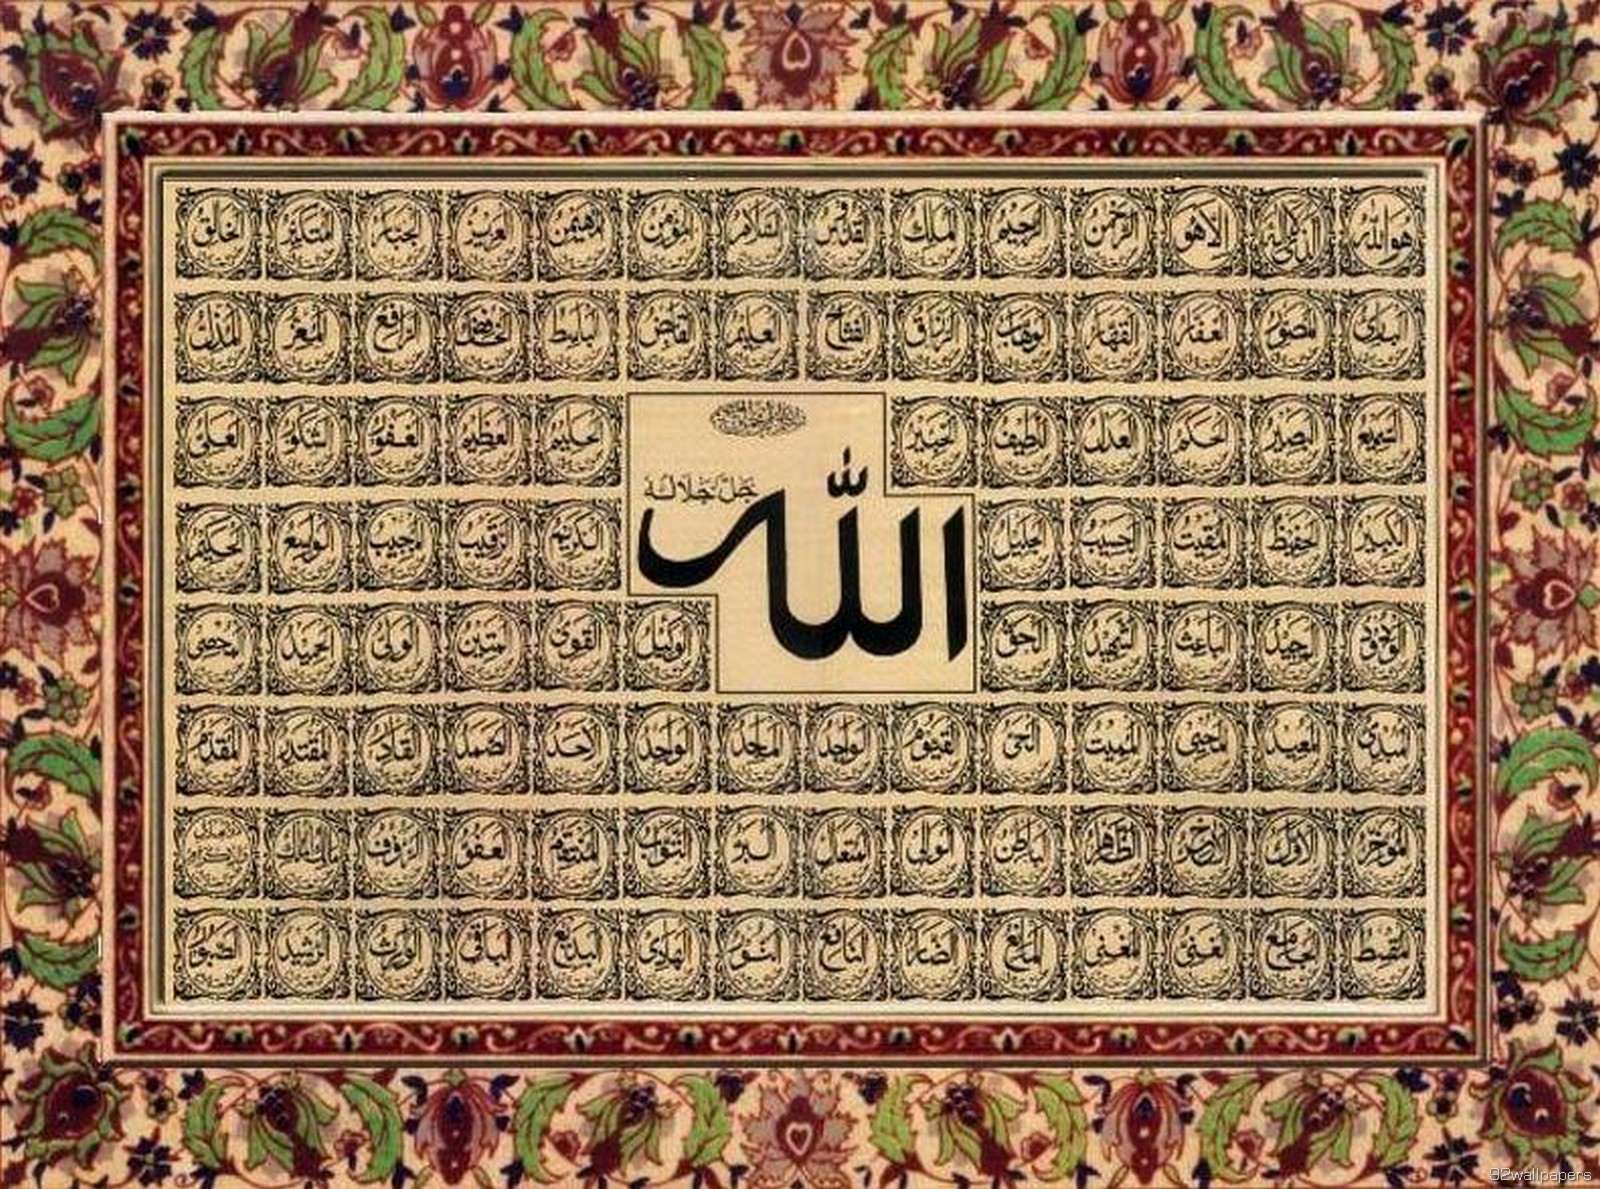 HD Wallpaper Free Download: Allah 99 Names Wallpaper HD Image